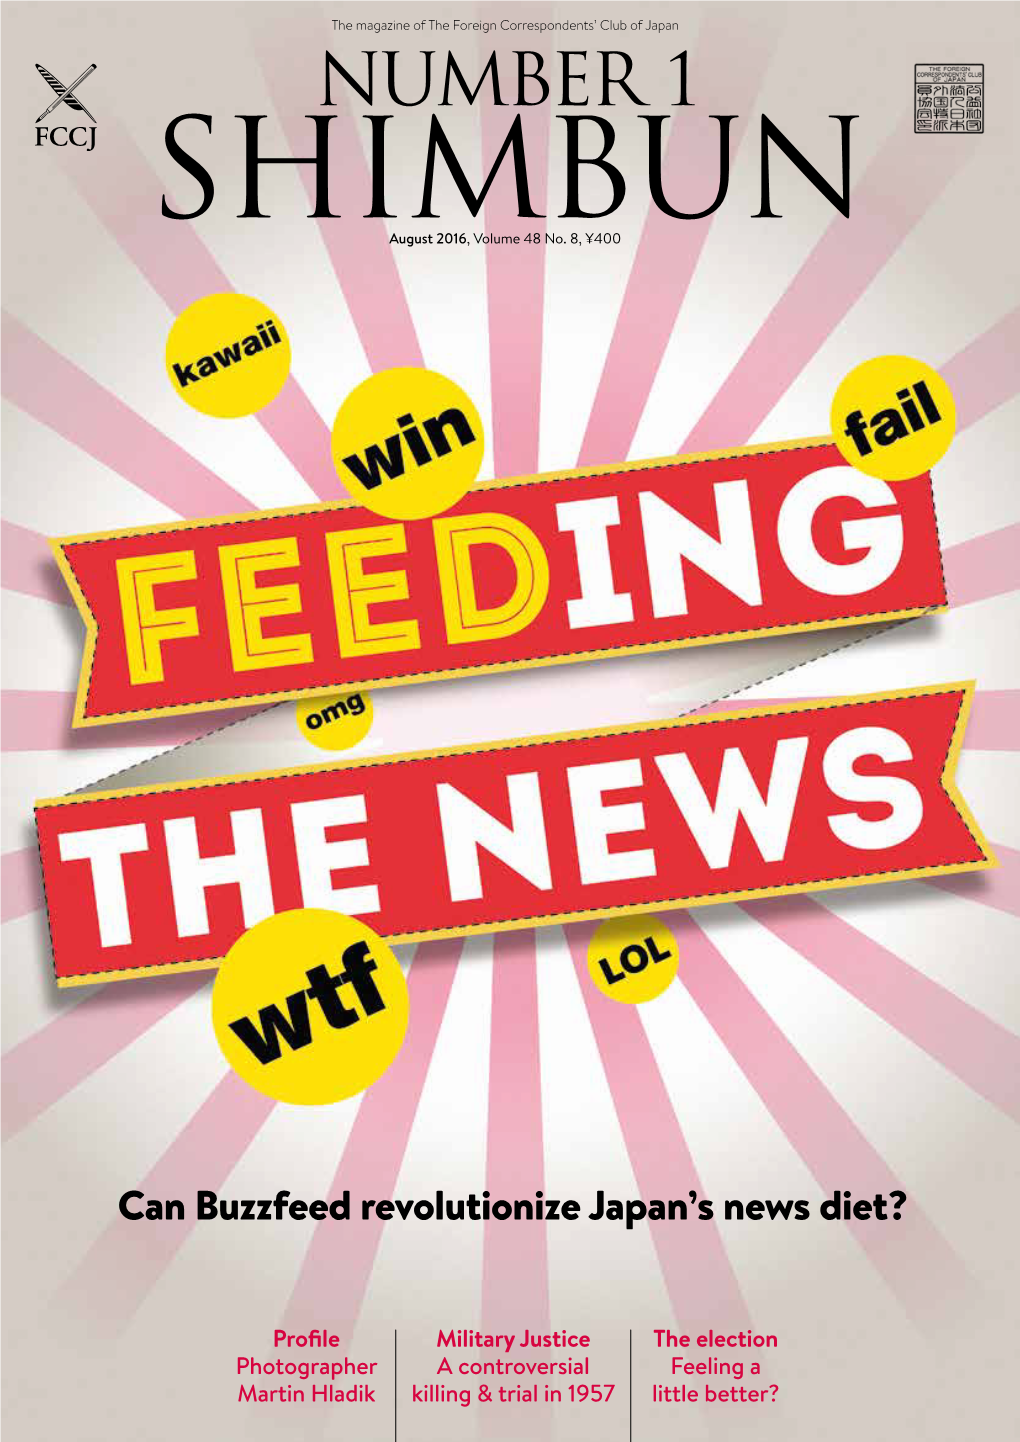 Can Buzzfeed Revolutionize Japan's News Diet?